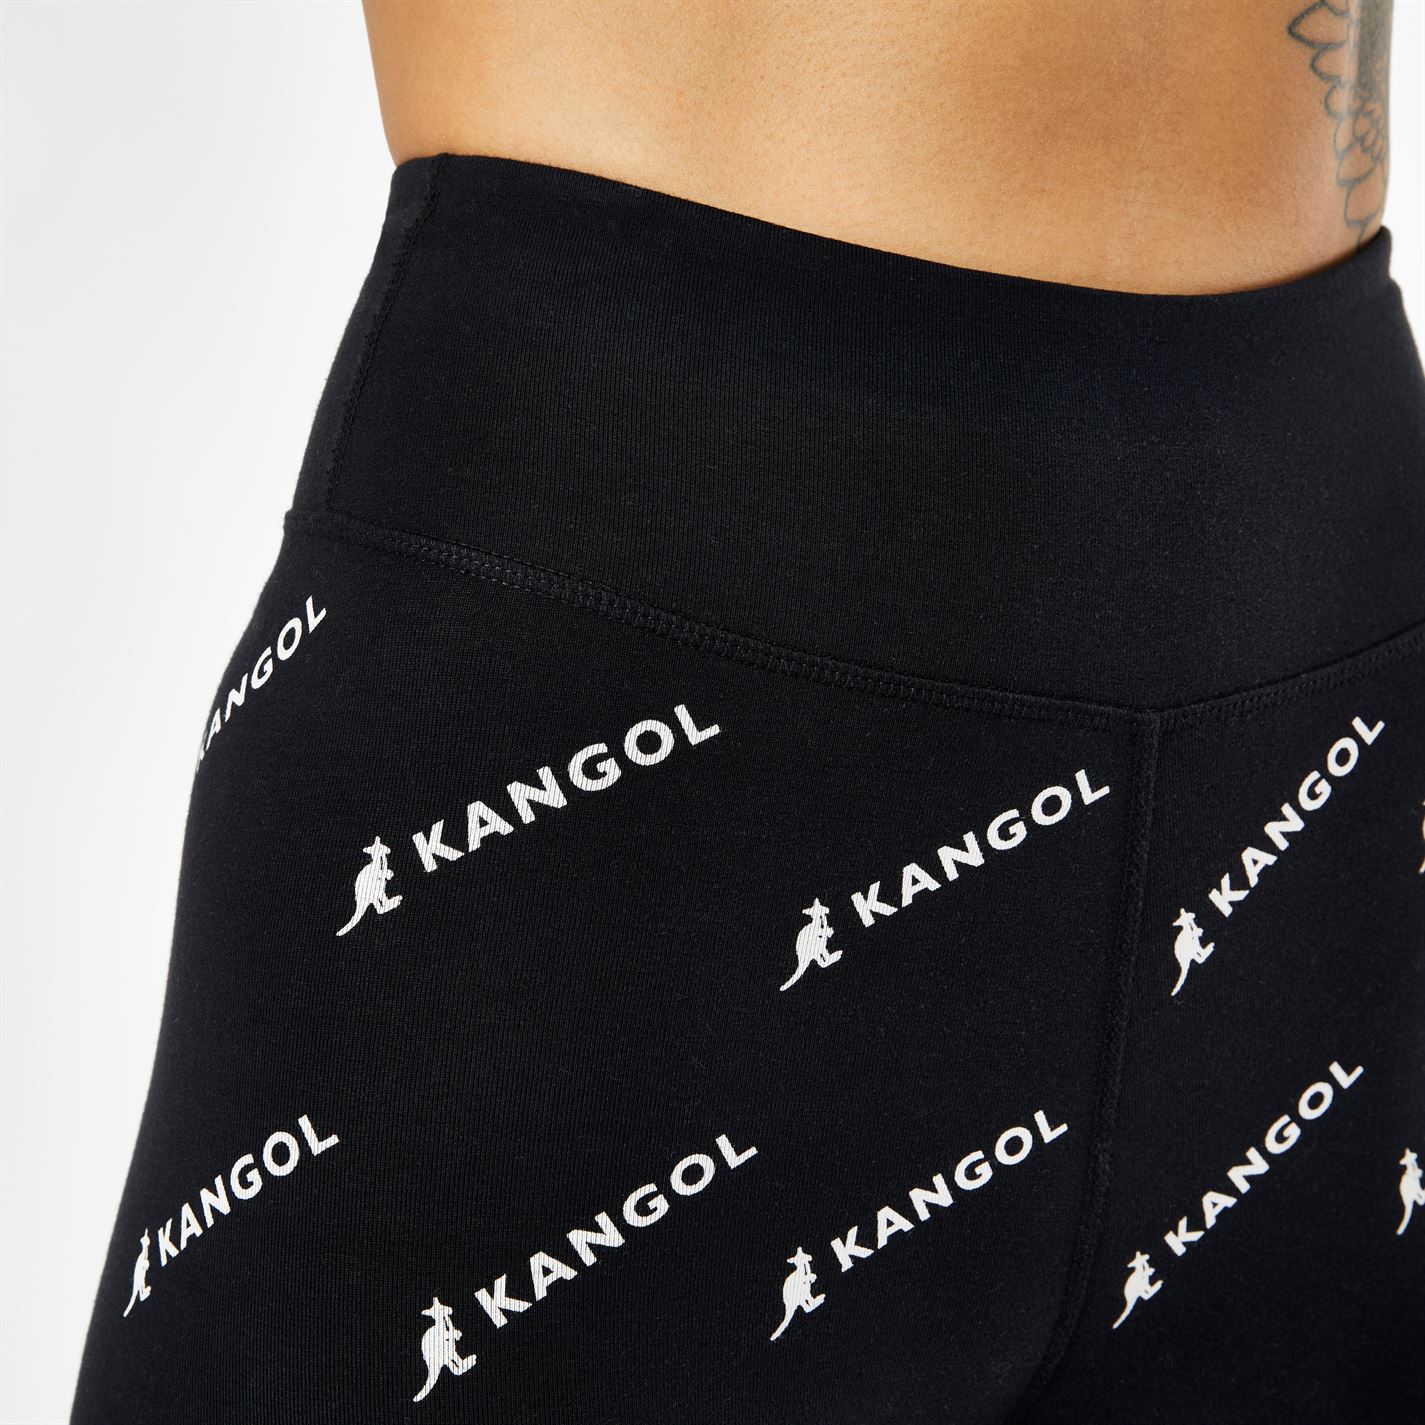 Kangol Cycle Shorts Ladies